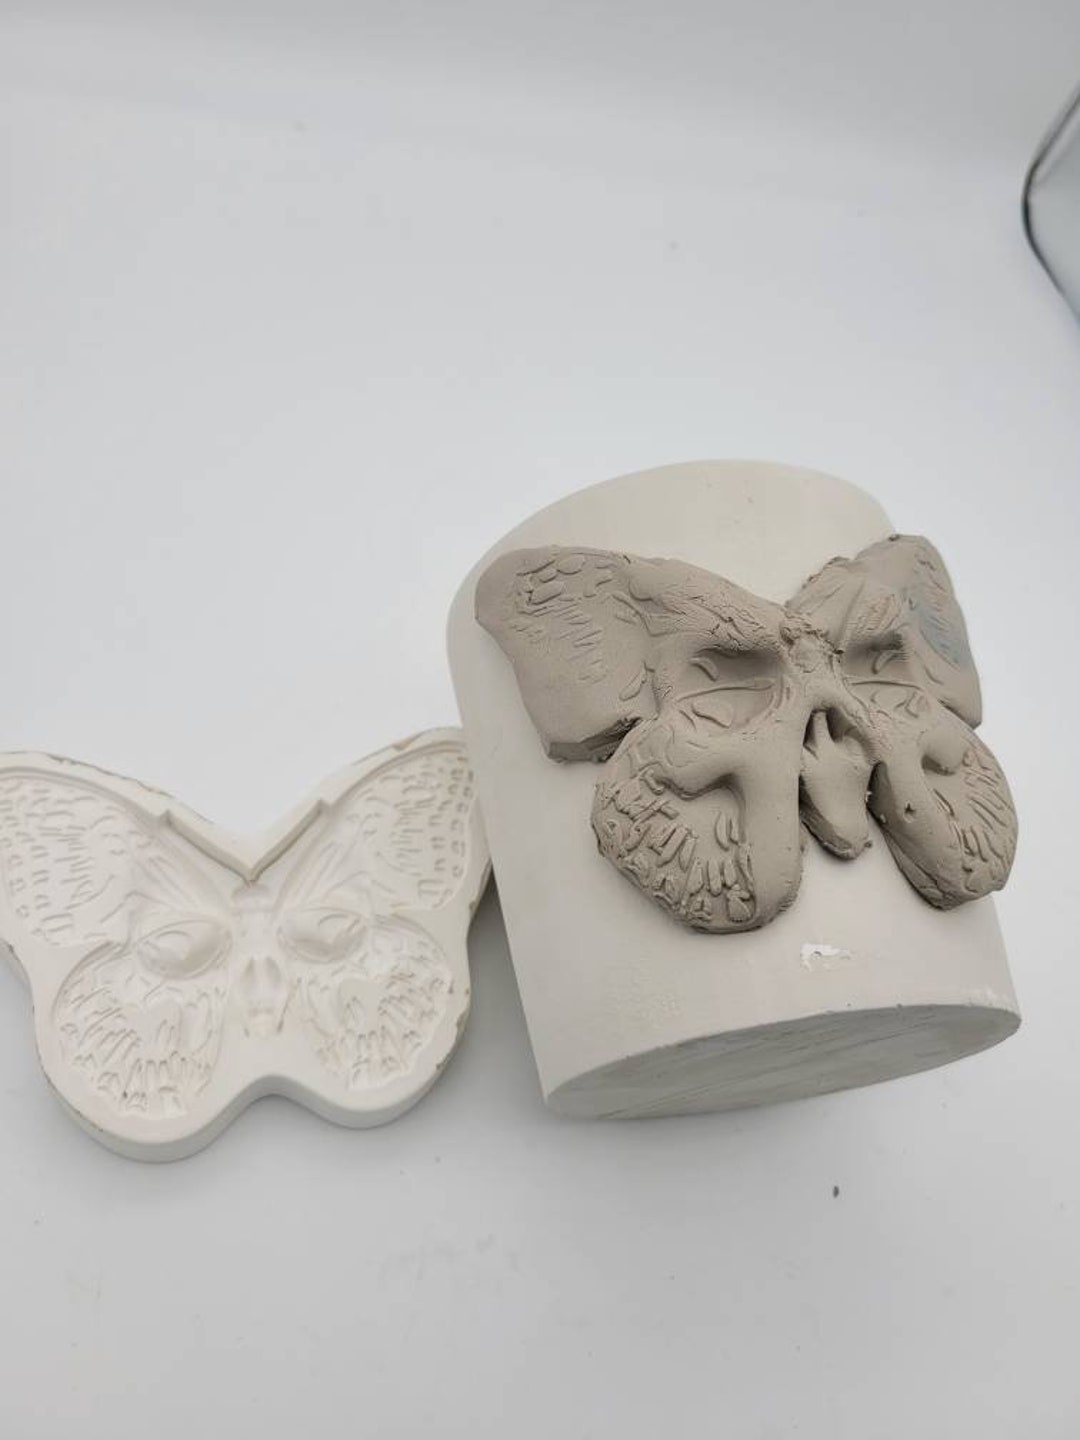 x3 Mushroom Sprig Mold Press Mould Ceramic Clay - HotCakesUSA